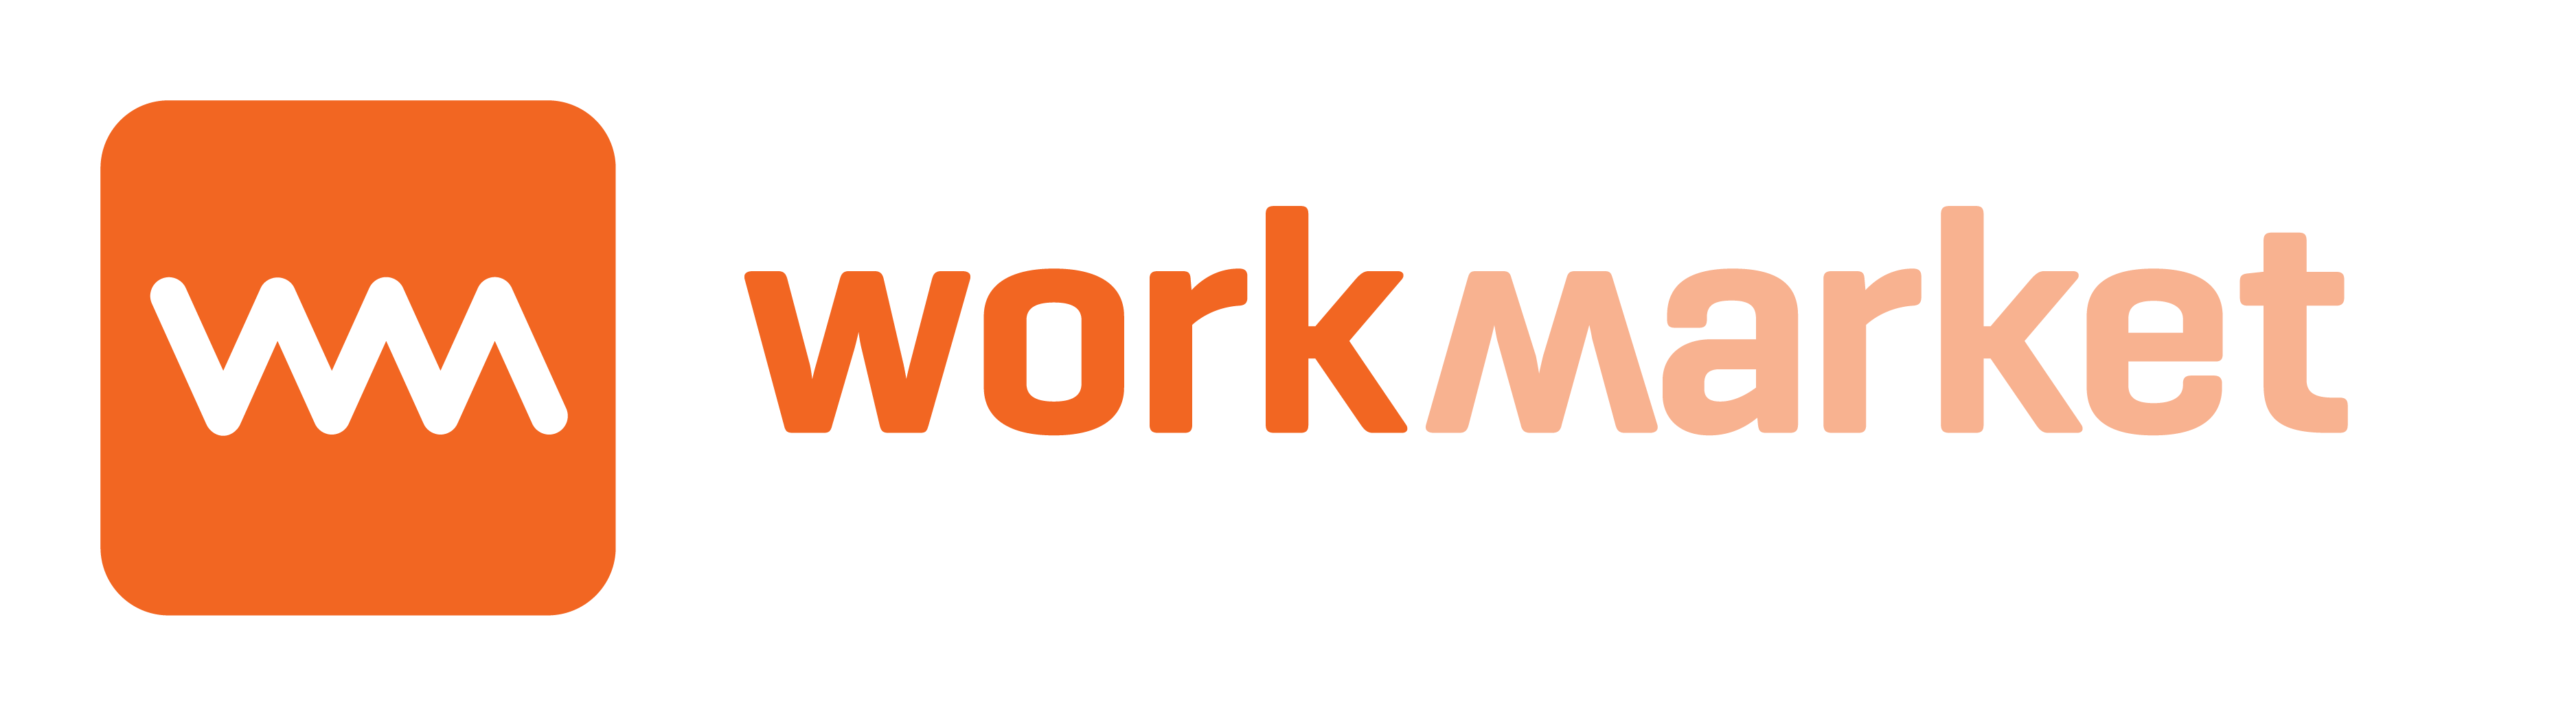 WorkMarket Acquires 